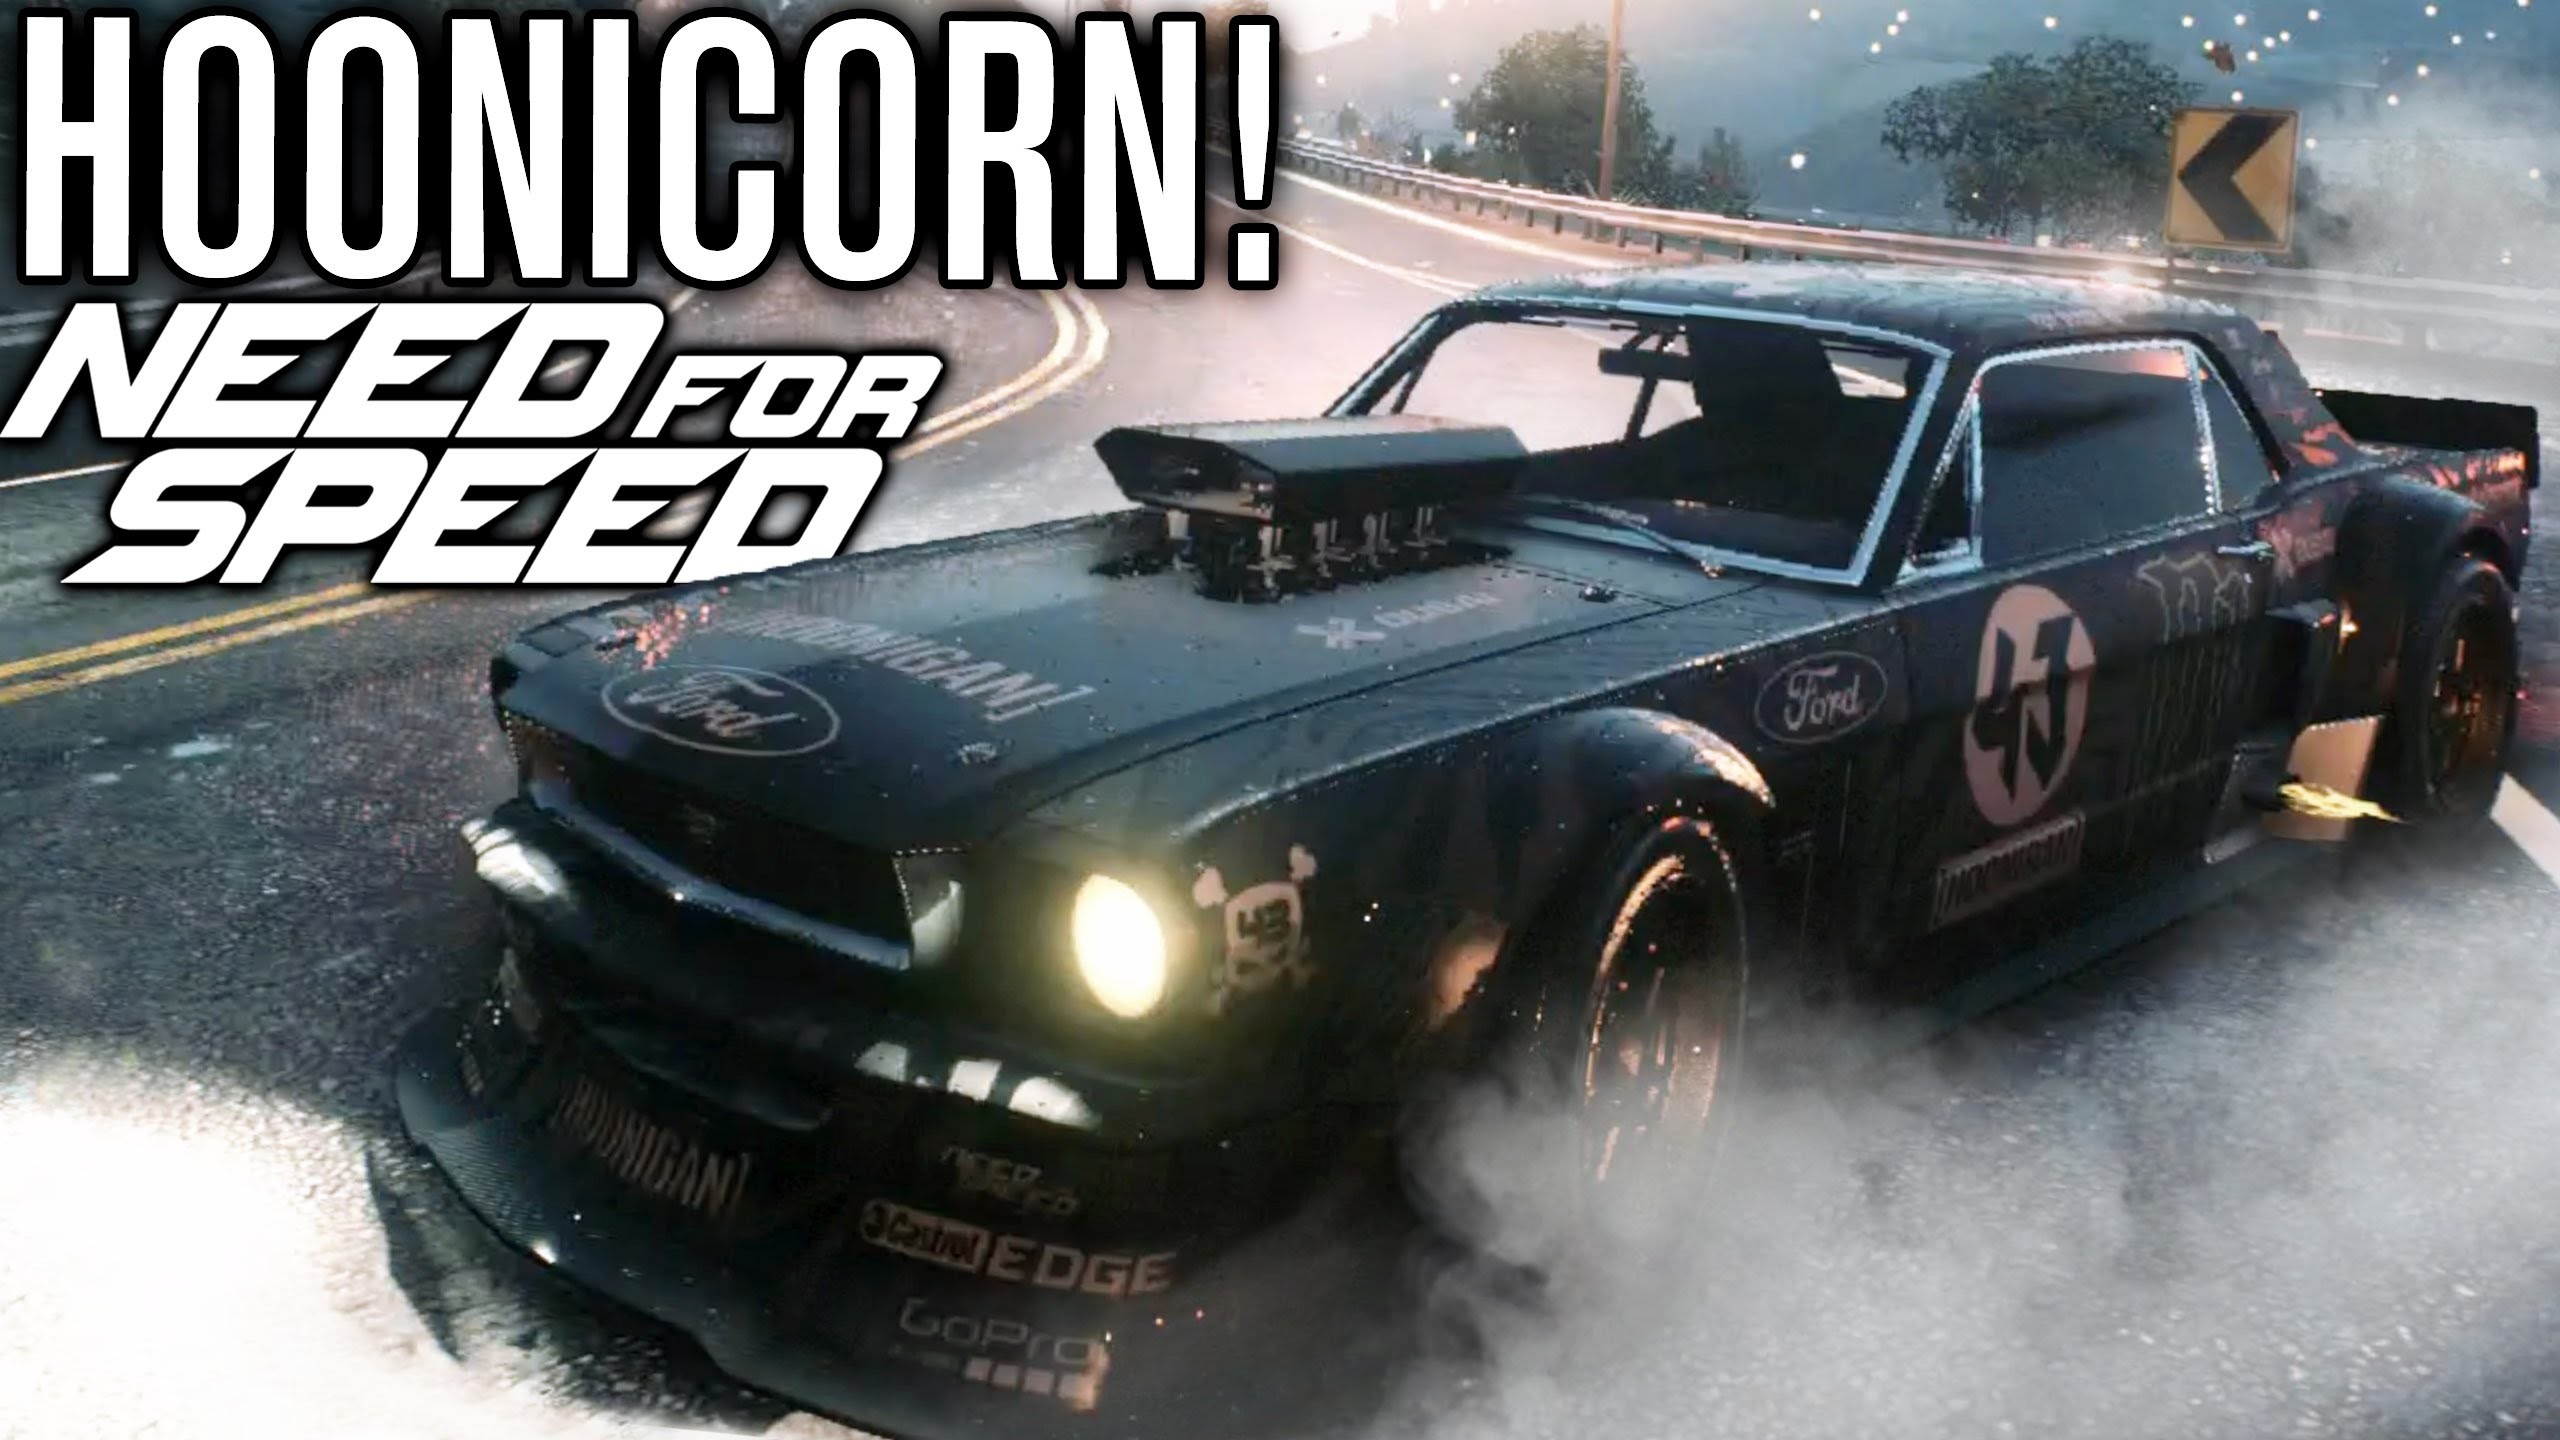 2560x1440 DRIFTING THE HOONICORN! | Need for Speed 2015 Gameplay (KEN BLOCK)